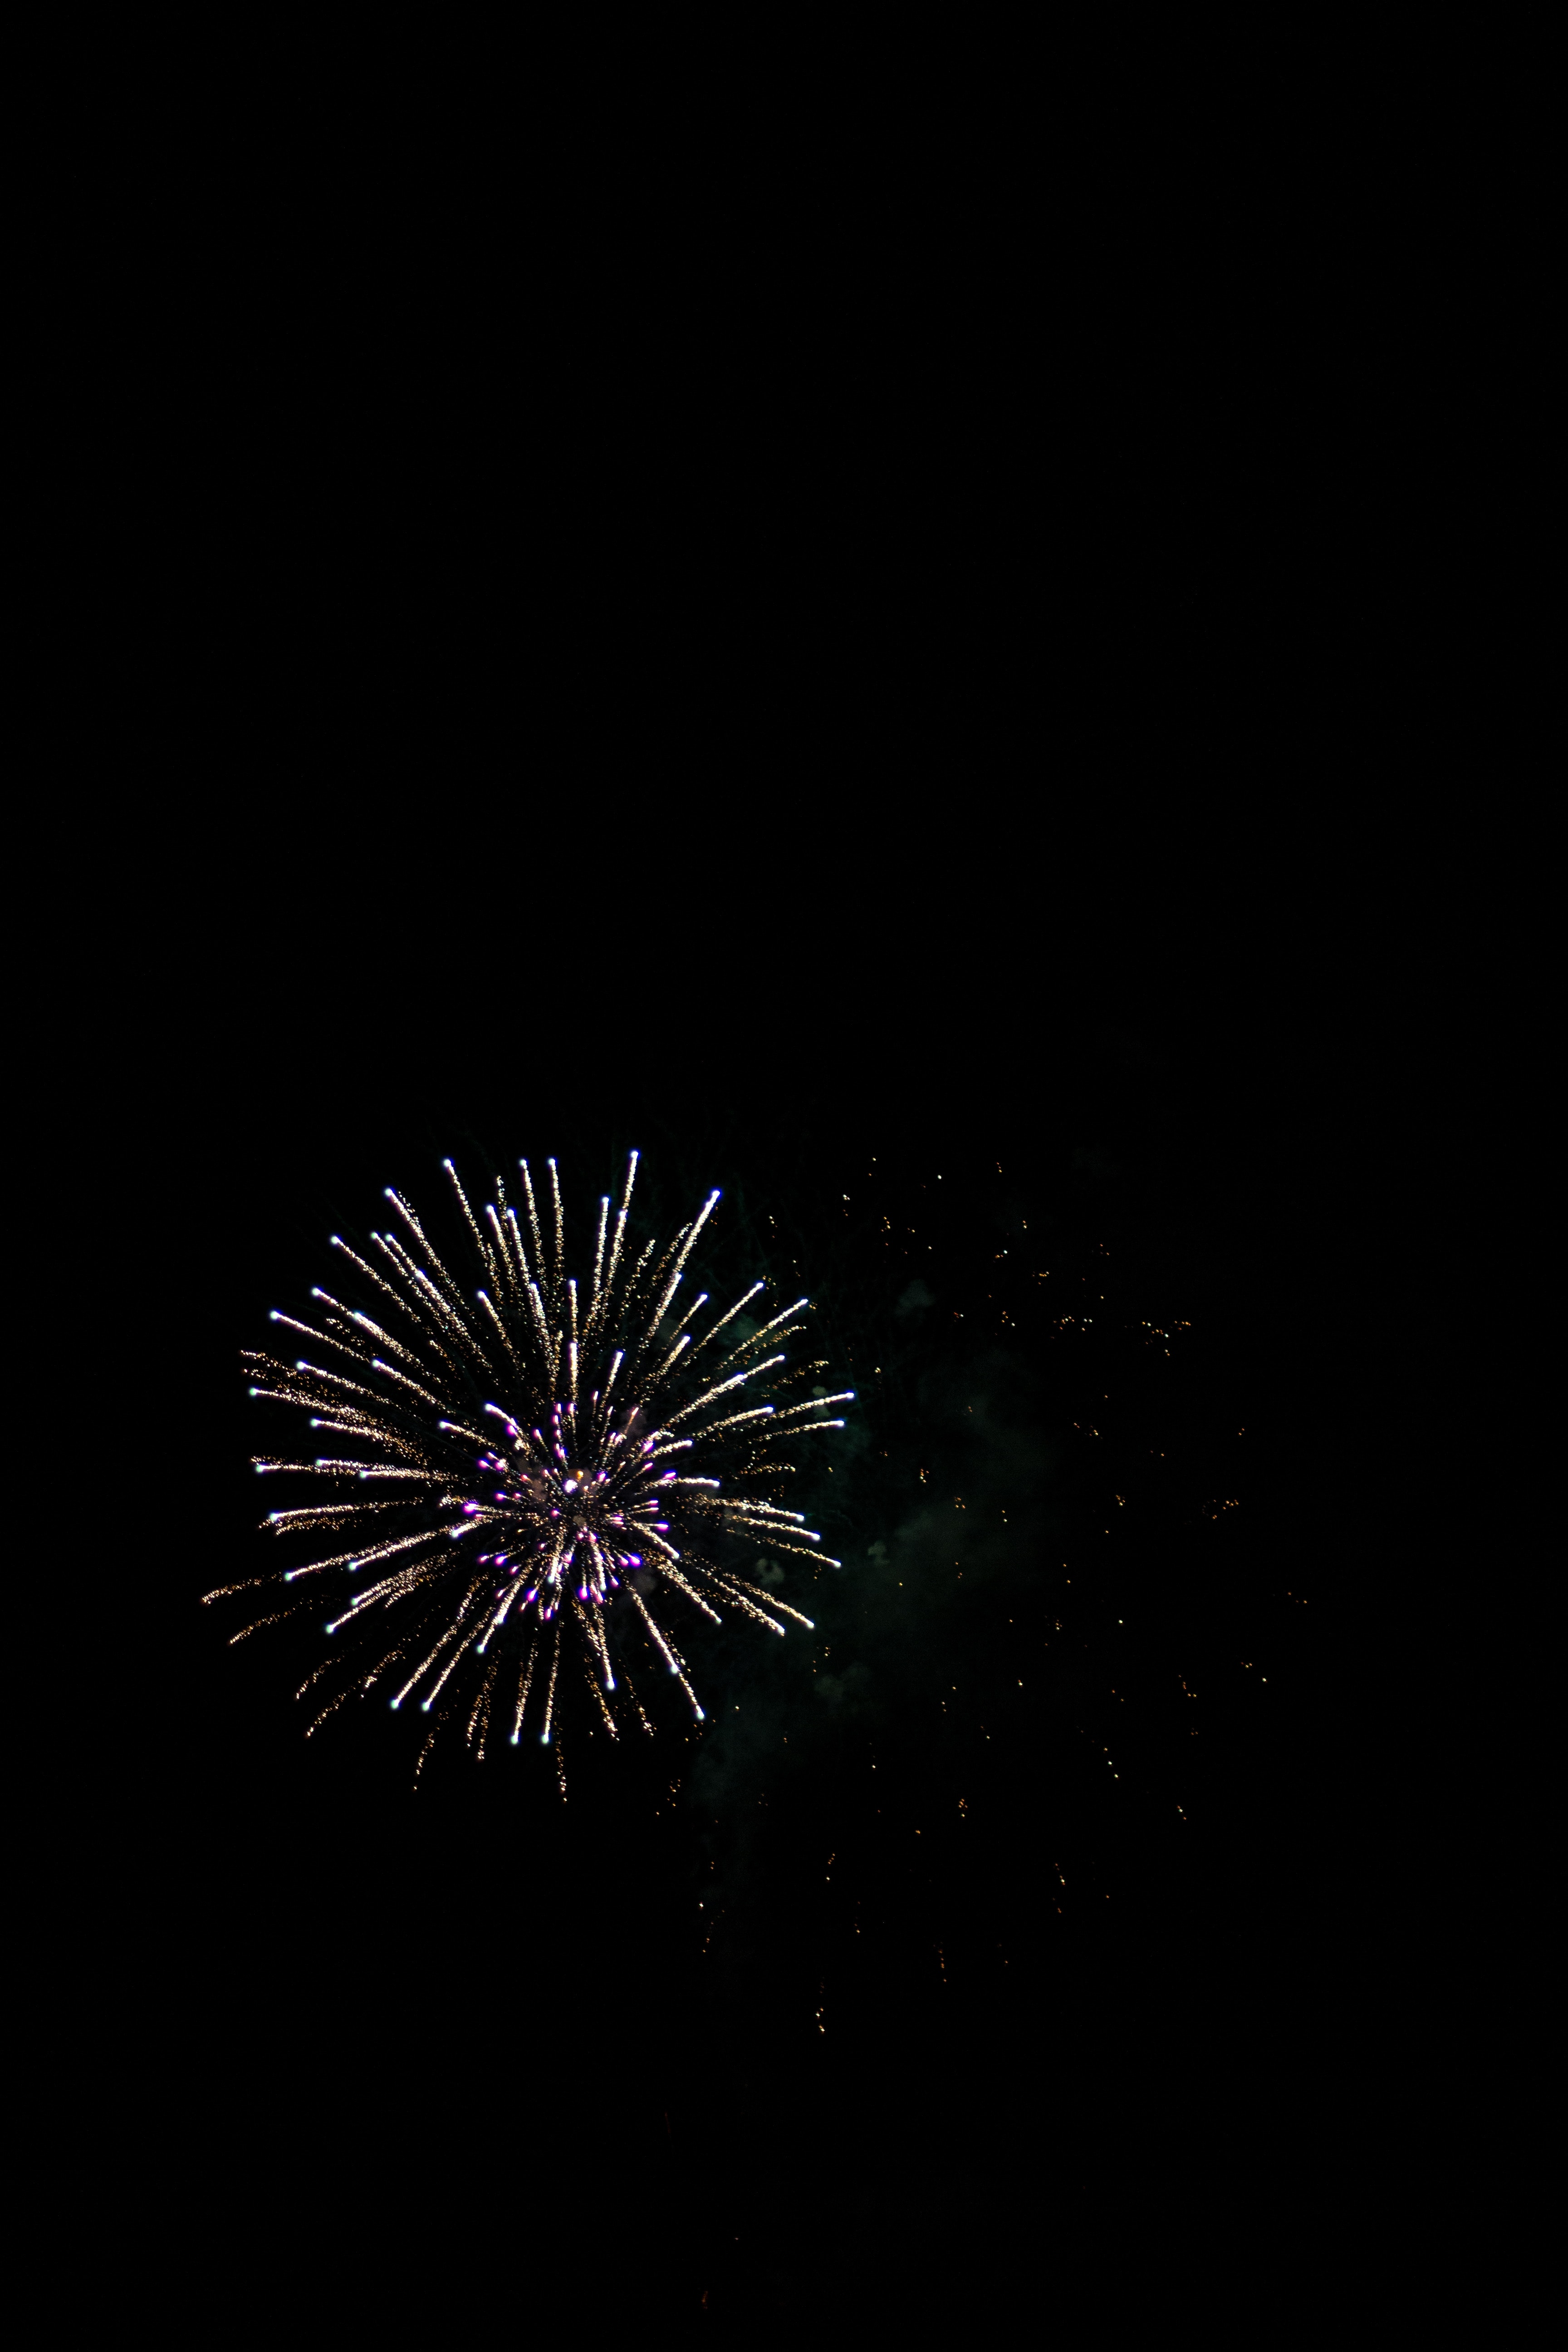 Firework salute, fireworks, holidays, holiday Free Stock Photos